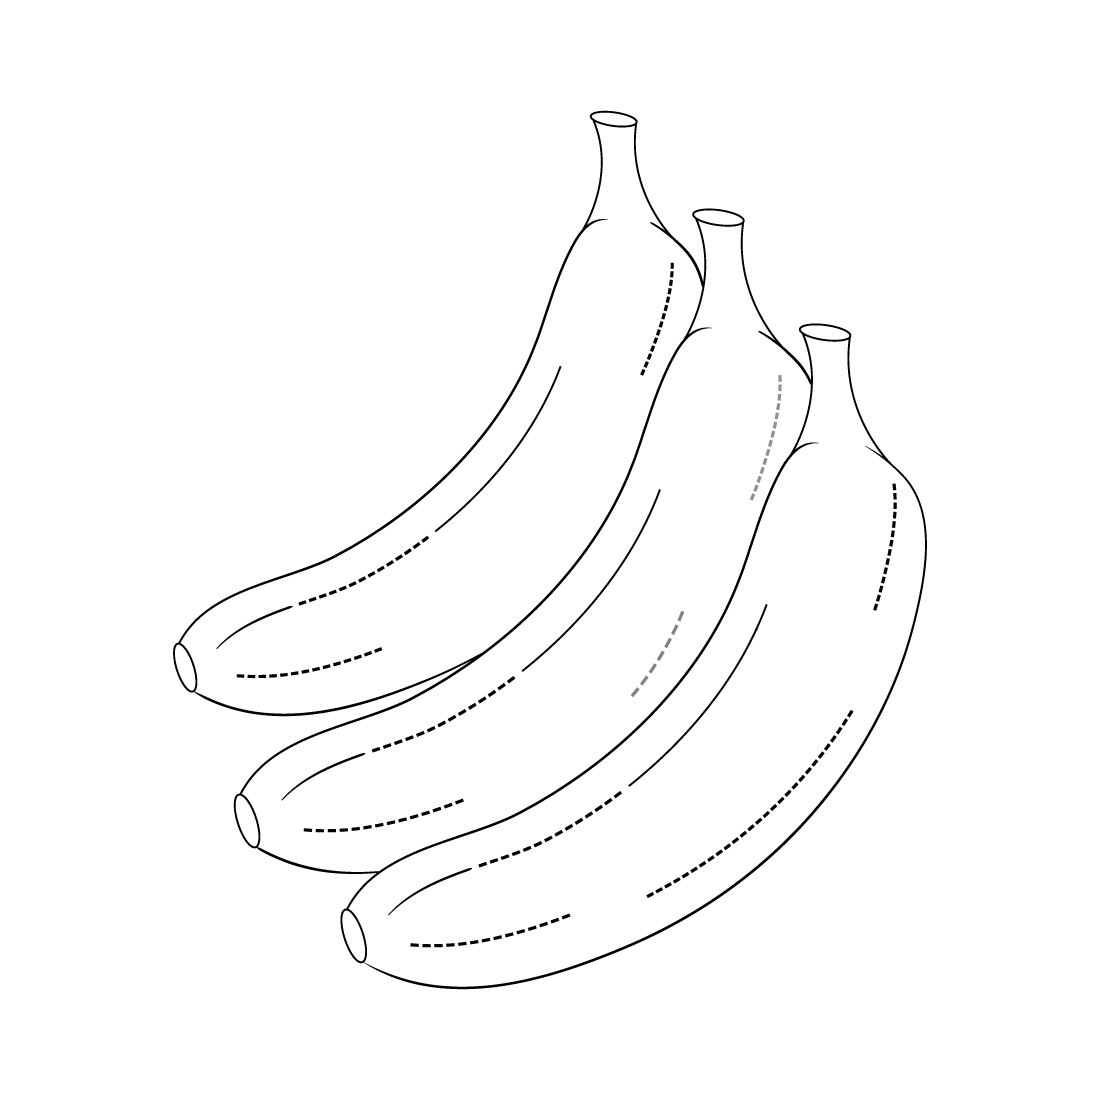 banana line drawing vector illustration preview image.